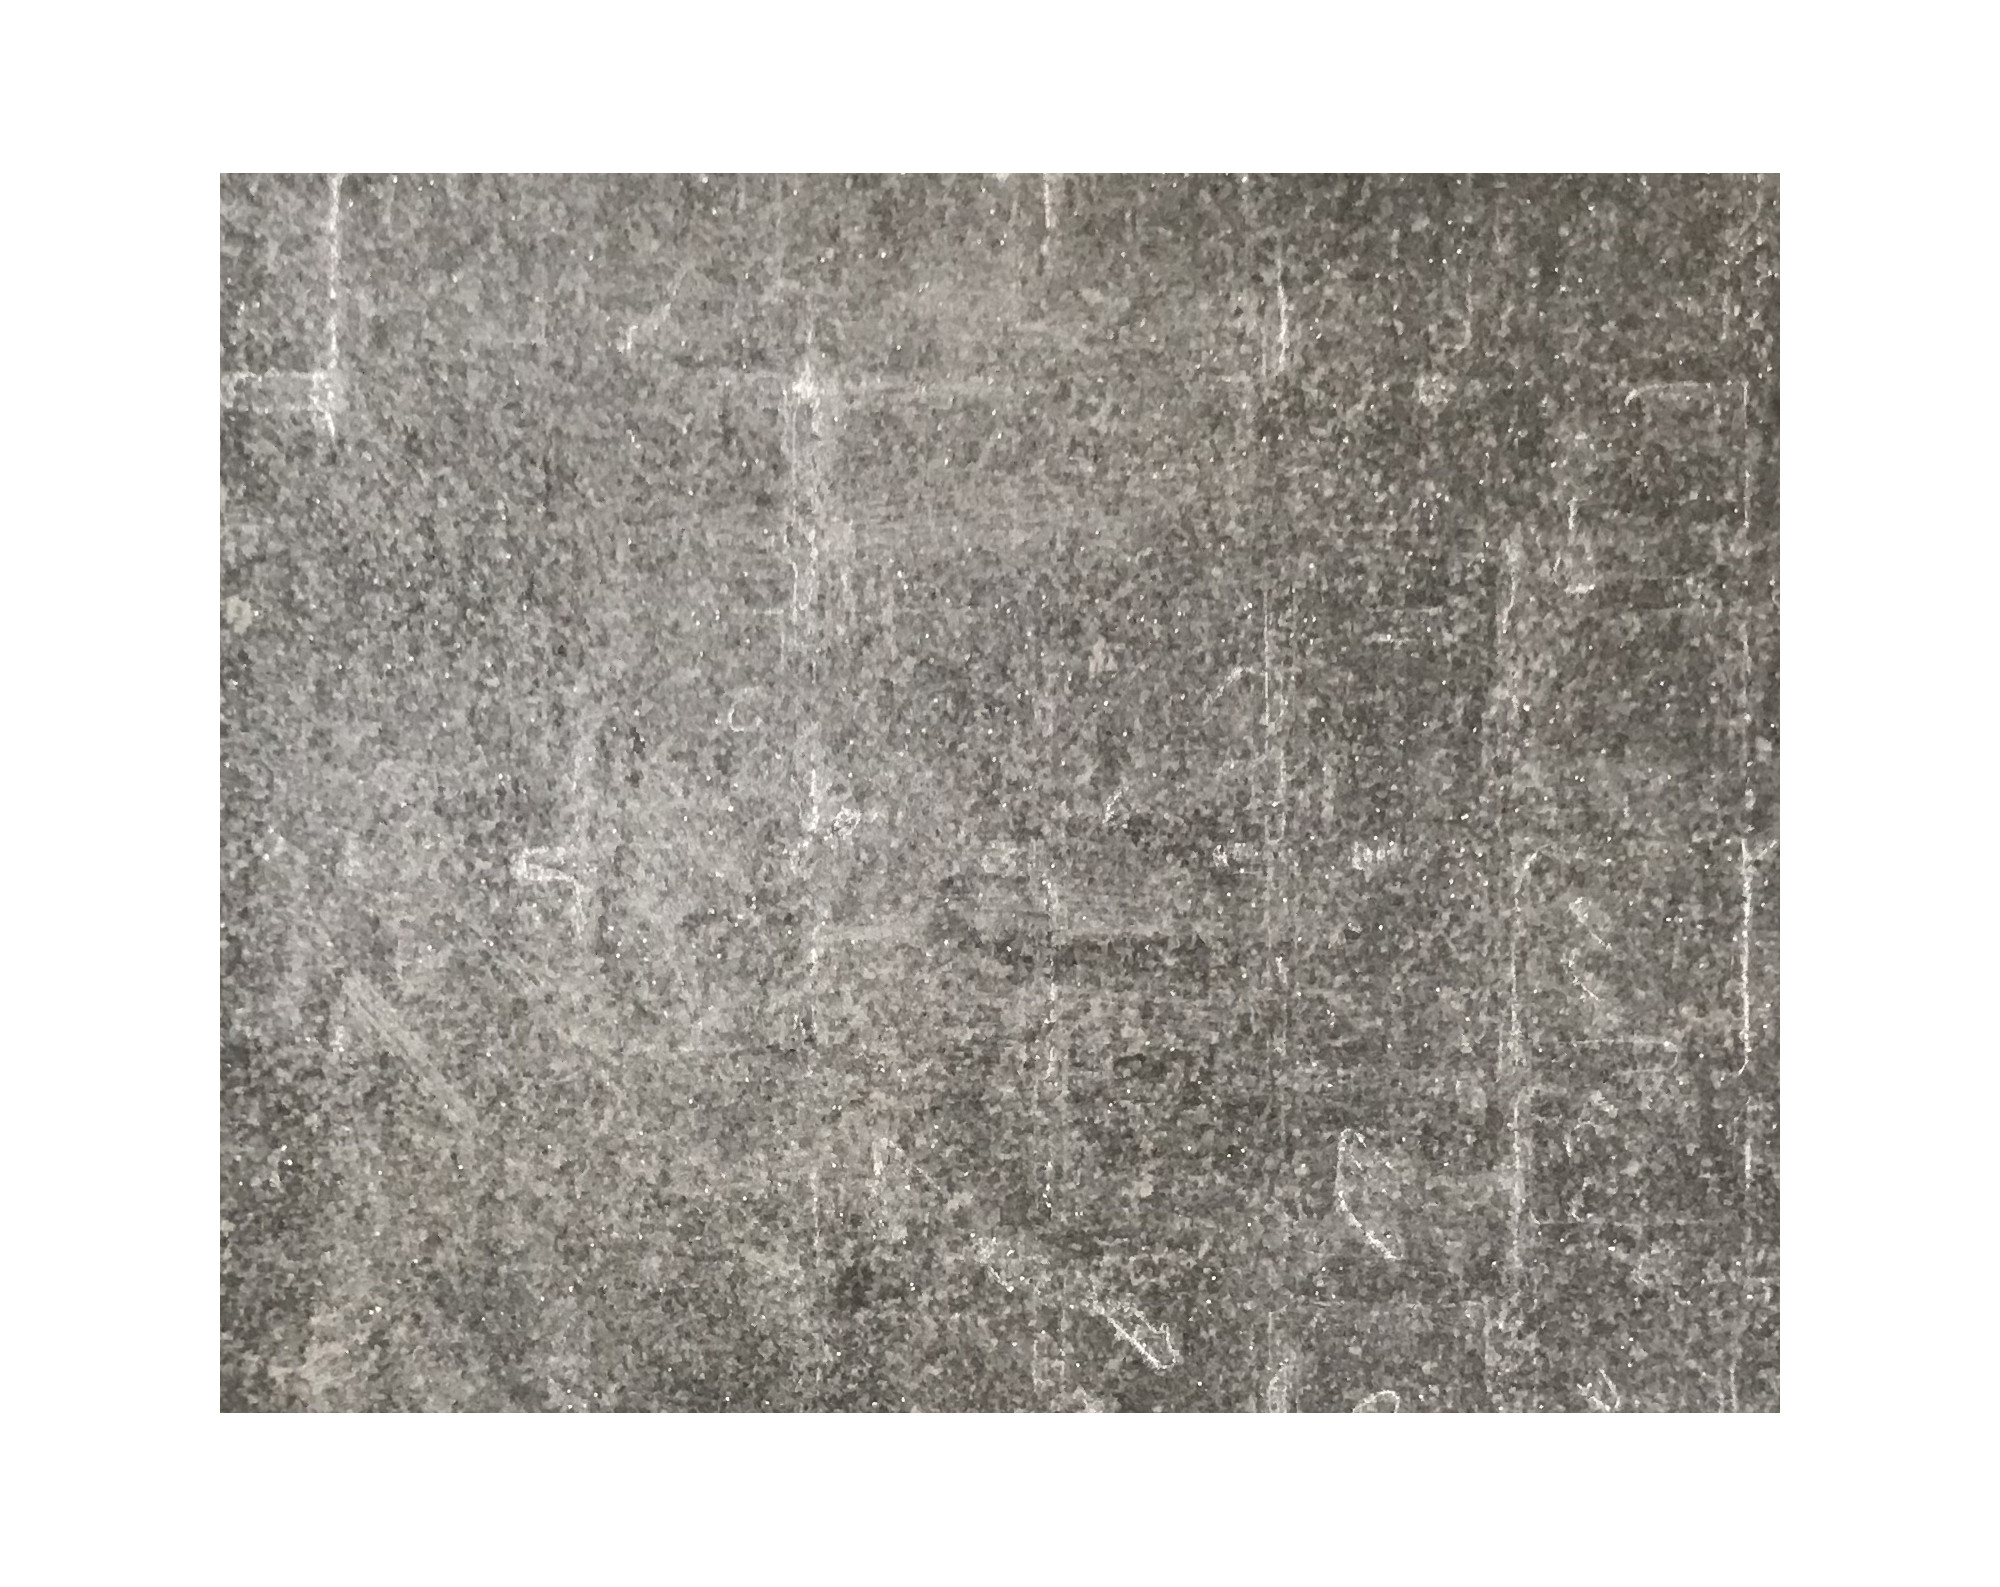 Harmo roc maranelloset, keramiek-serie, rond d:4,20m, zand zwart, keramisch porselein